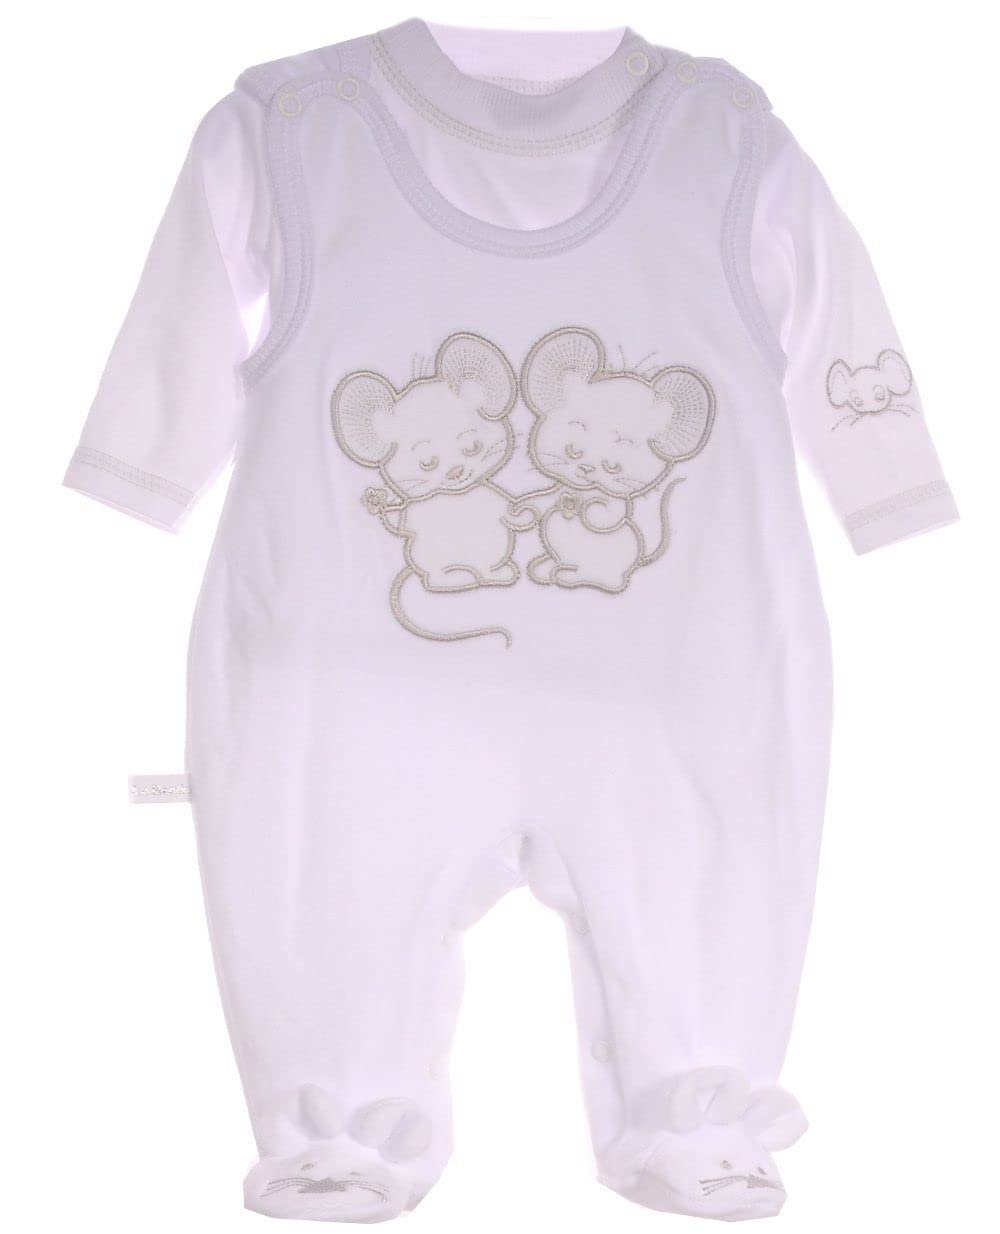 La Bortini Baby Strampler und Shirt Baby Anzug 46 50 56 62 68 (44-50, weiß)